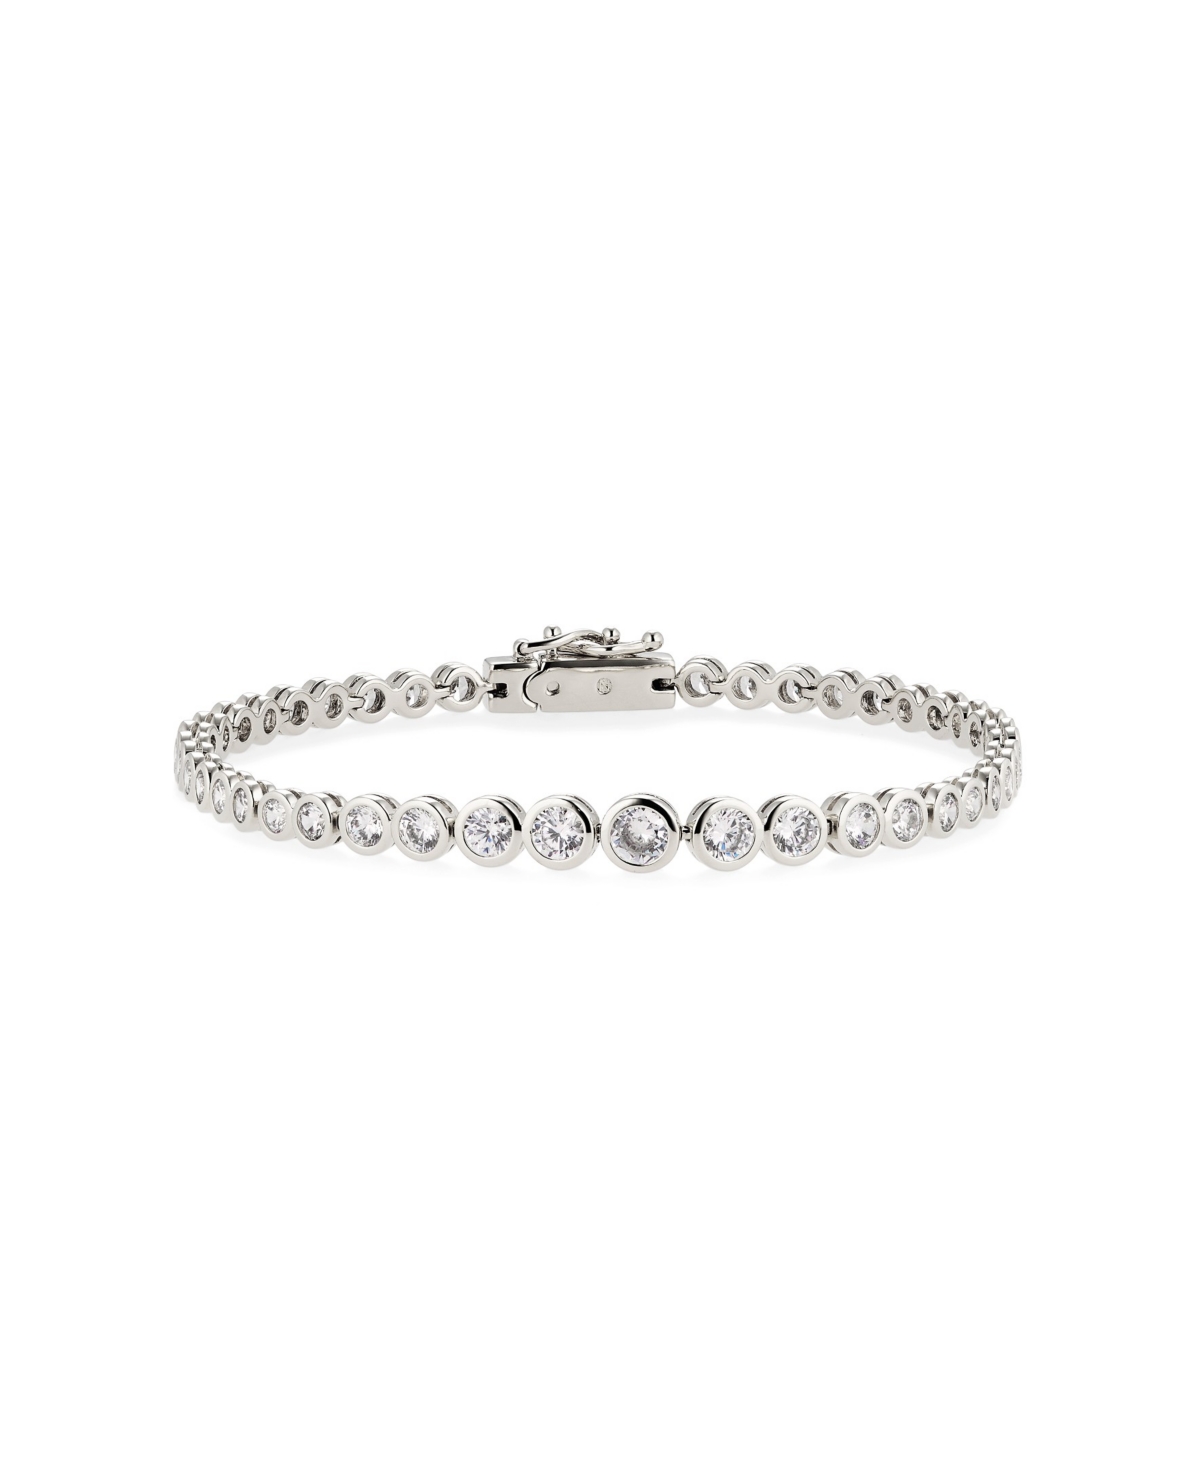 Danori Women's Tennis Bracelet, Created for Macy's - Silver-tone